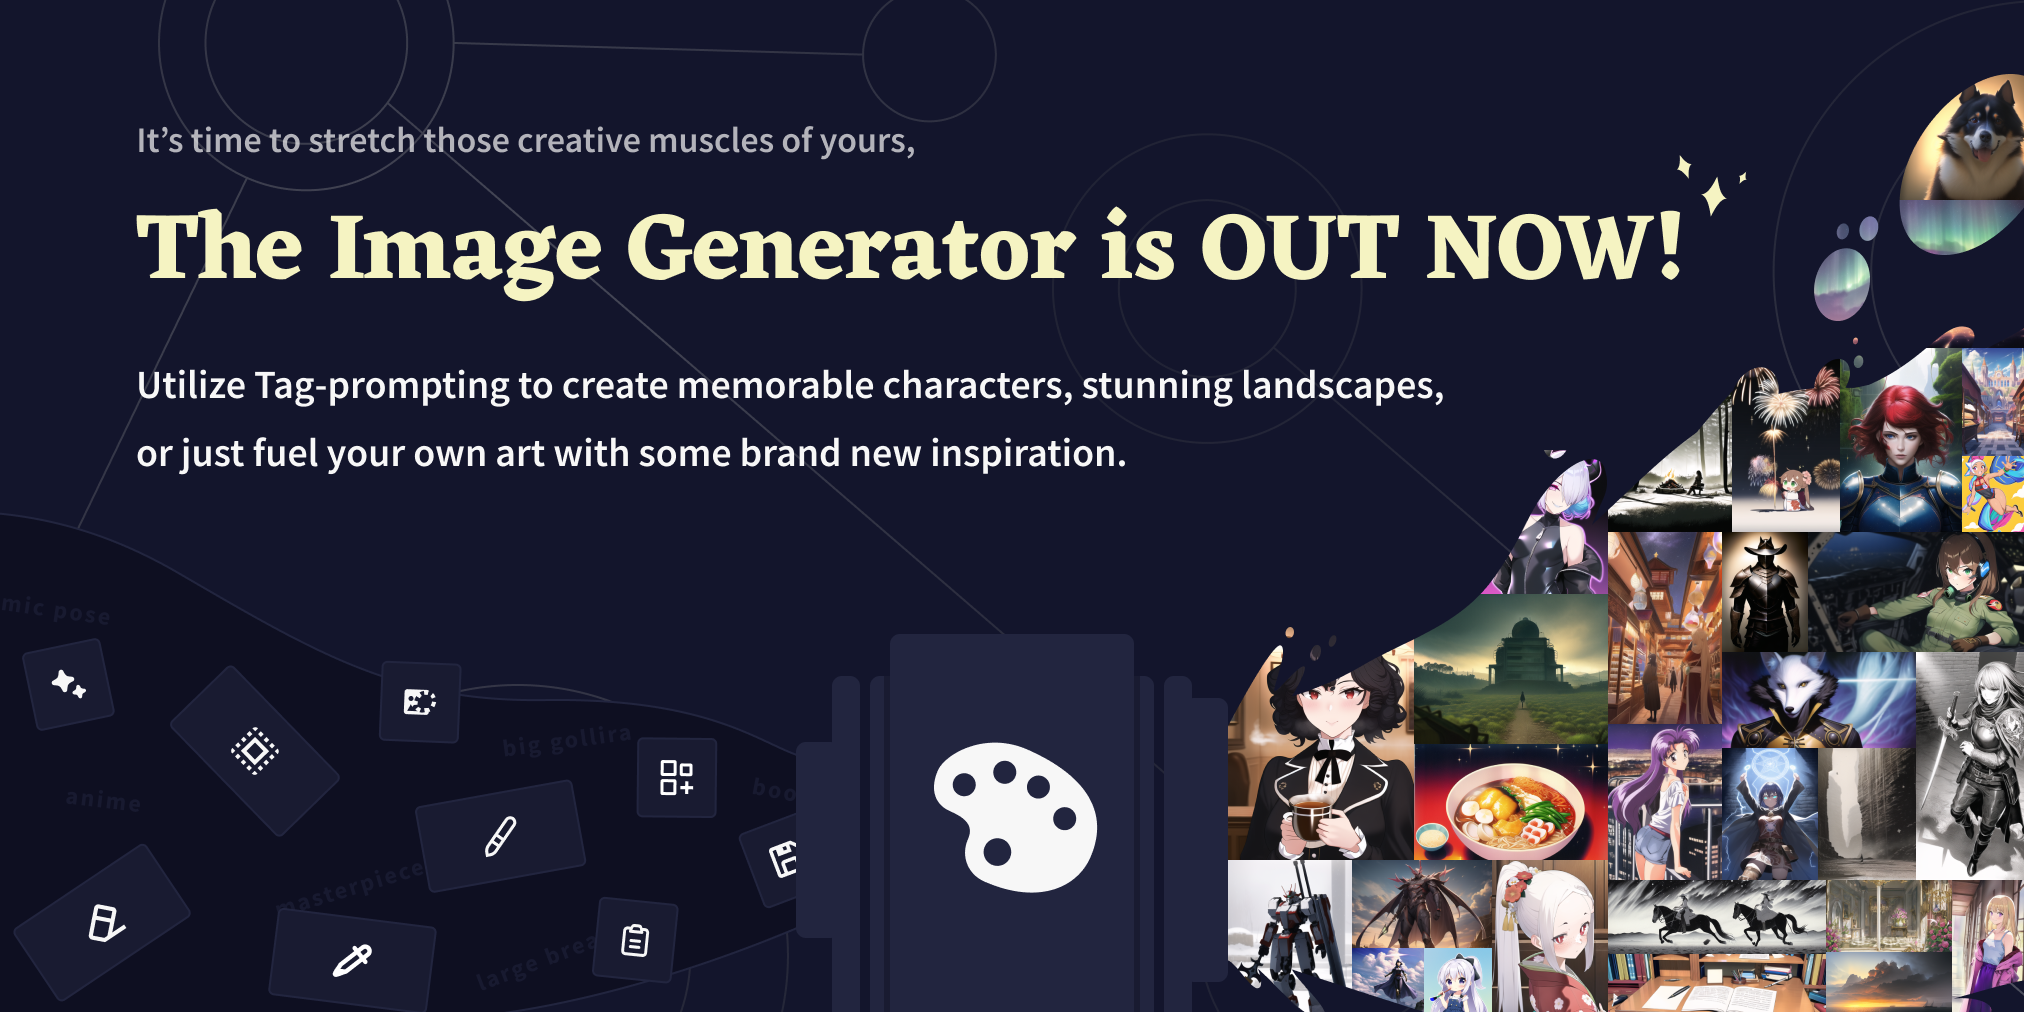 Image Generation has arrived at NovelAI!